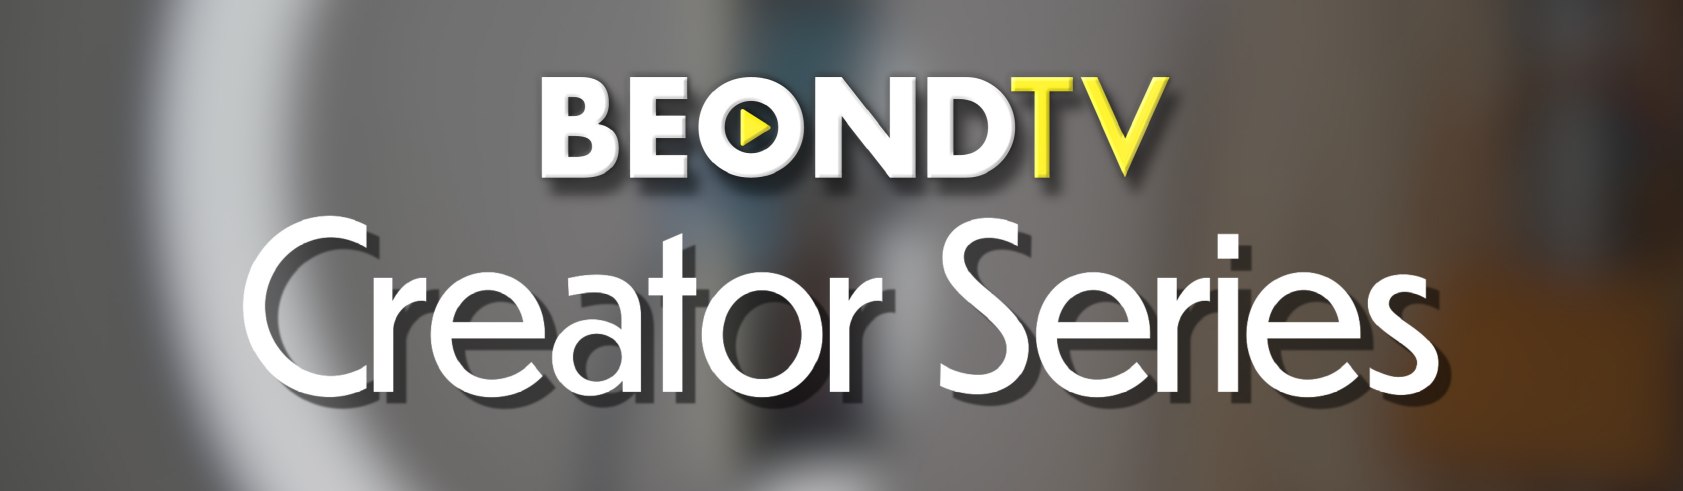 BEONDTV Creator Series